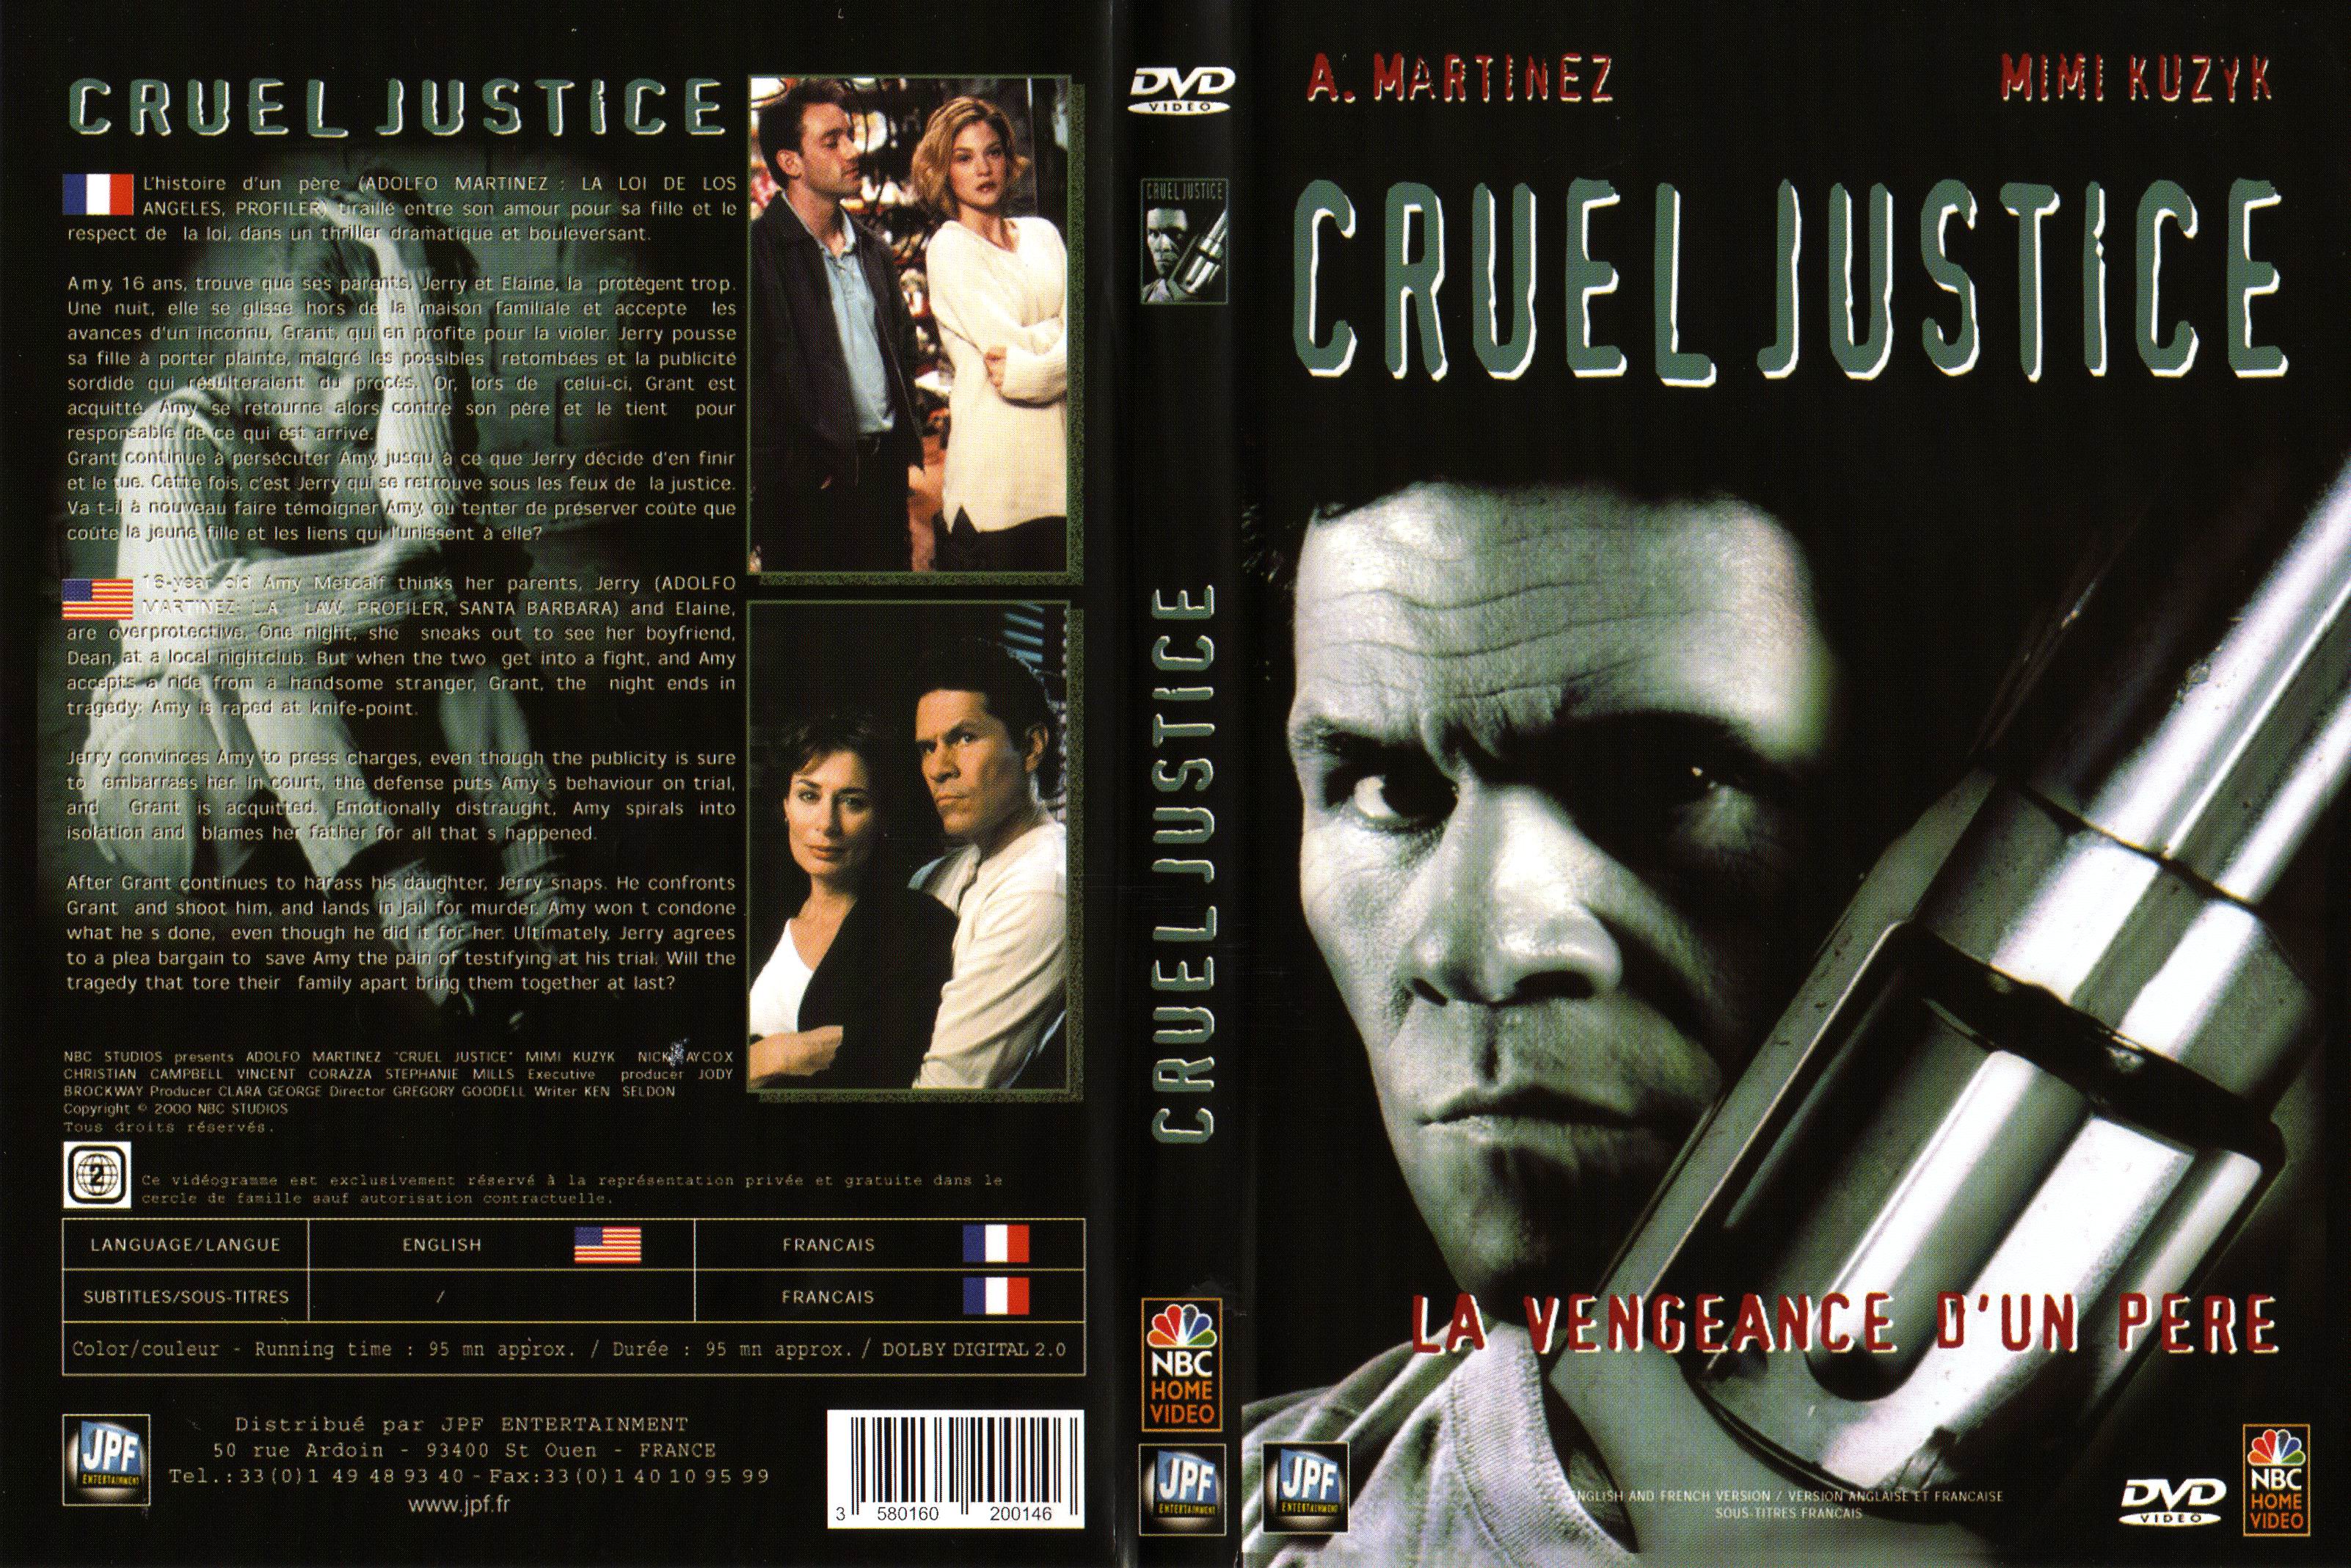 Jaquette DVD Cruel justice